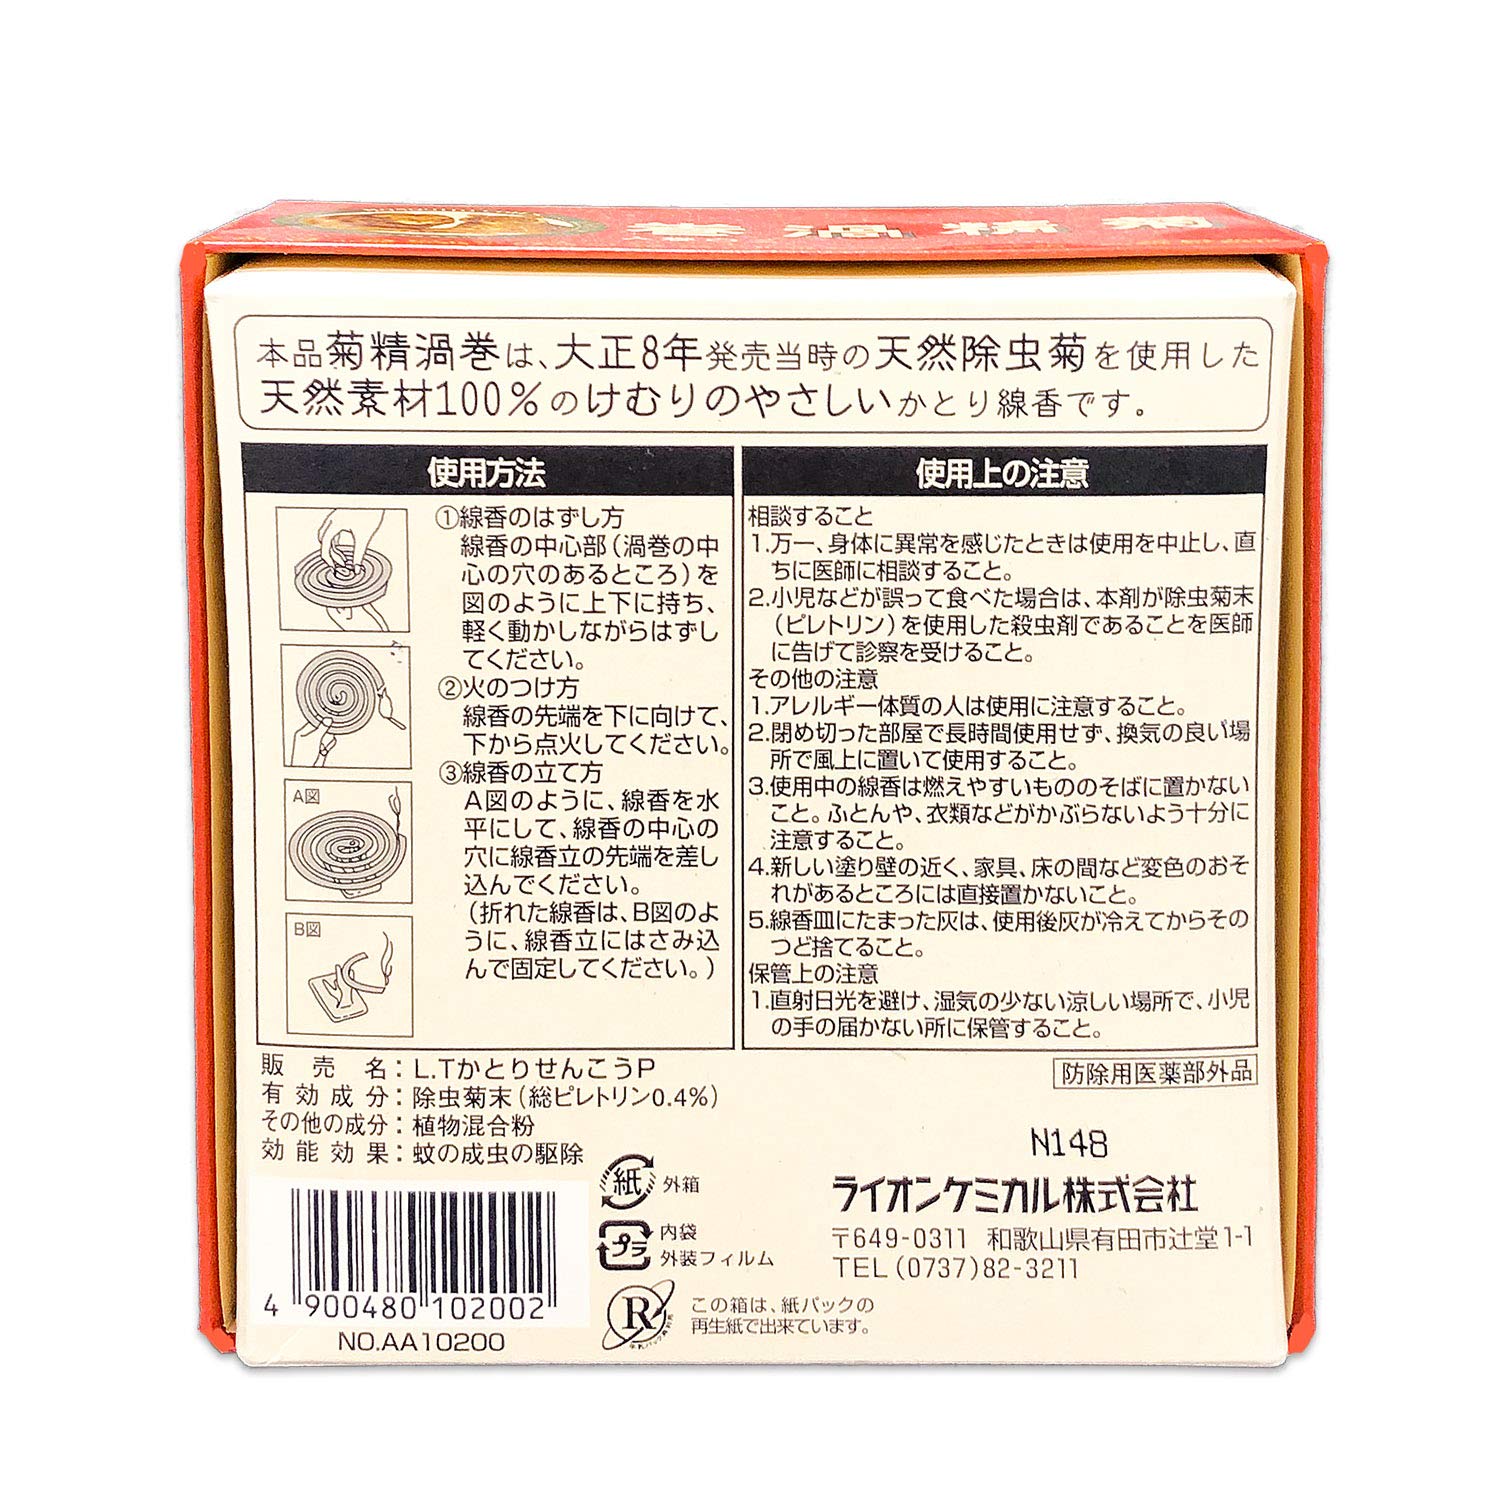 Lion Chemical Japan Katori Incense 20 Rolls Box Insect Repellent - Kikusei Uzumaki Natural Pyrethrum